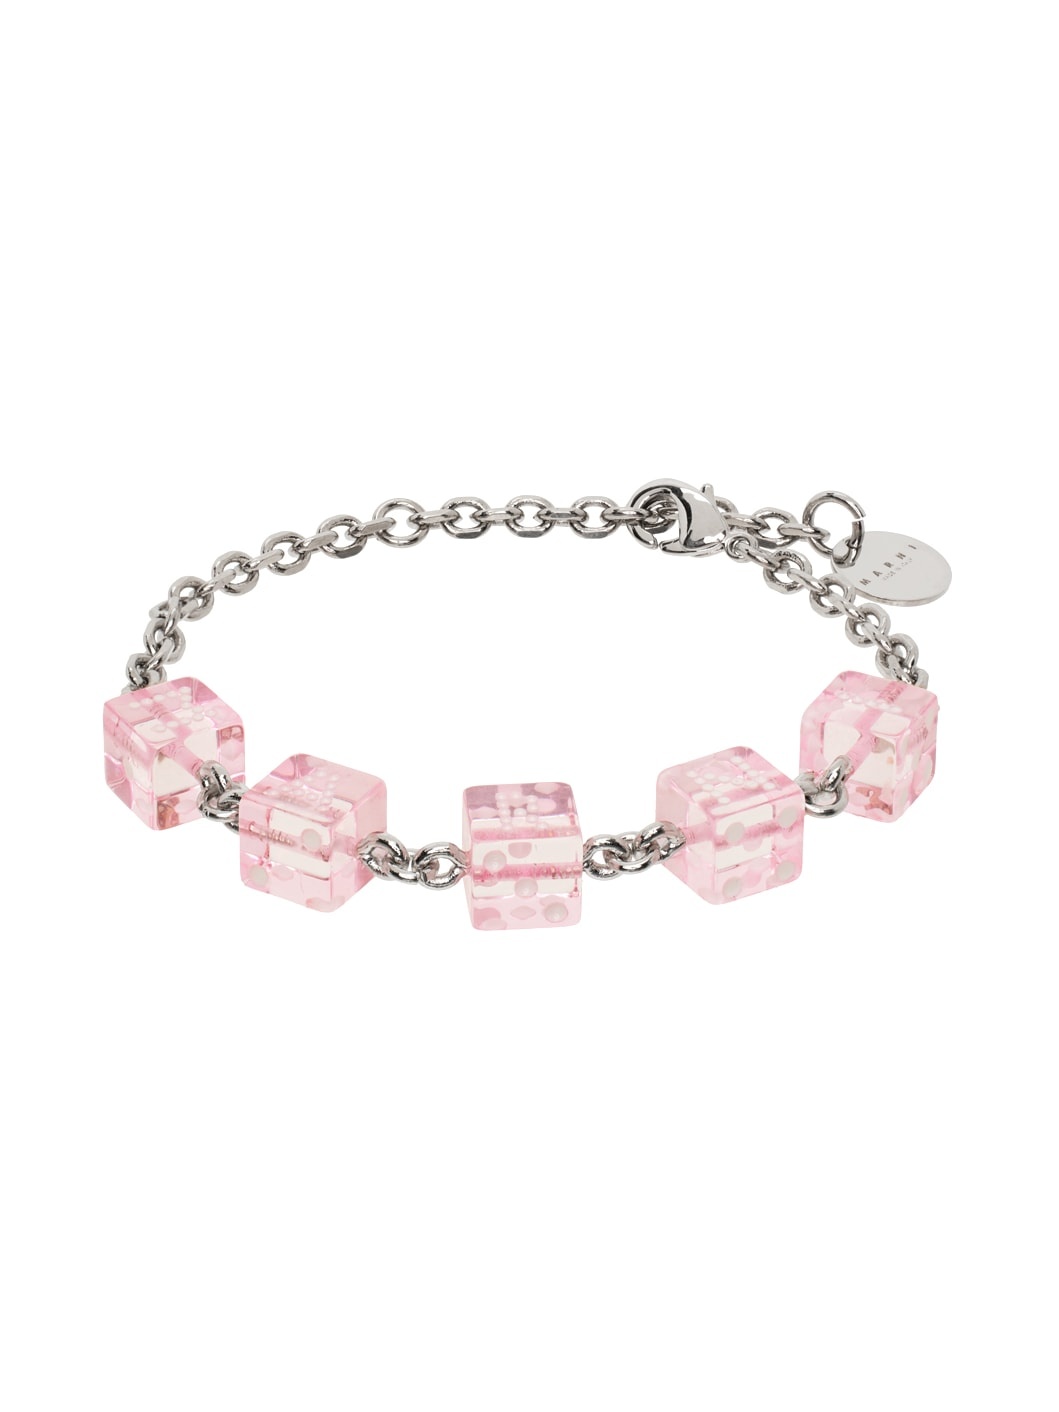 Silver & Pink Dice Charm Bracelet - 1